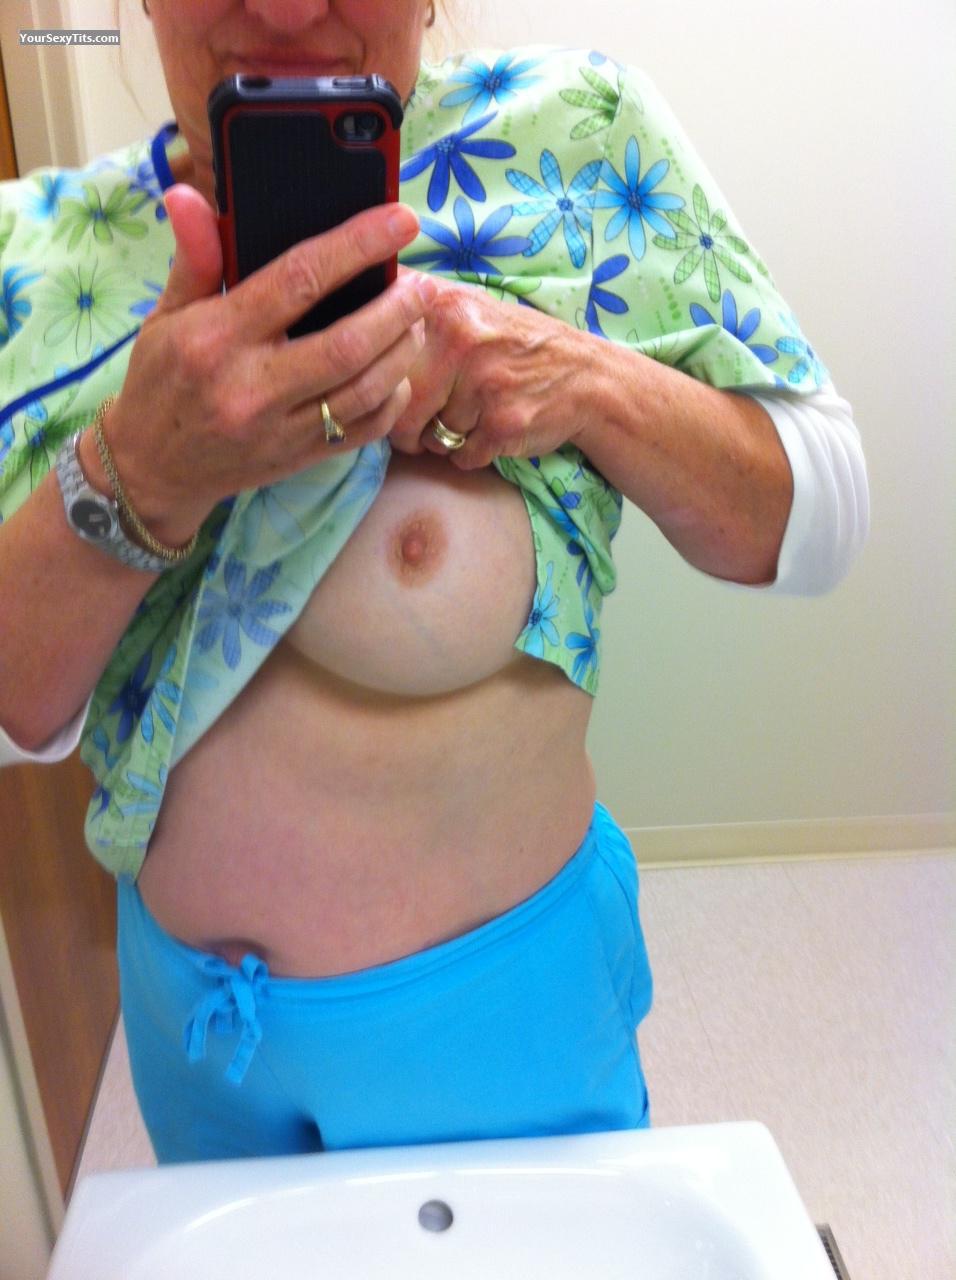 Tit Flash: My Medium Tits By IPhone (Selfie) - Atlanta Nurse from United States